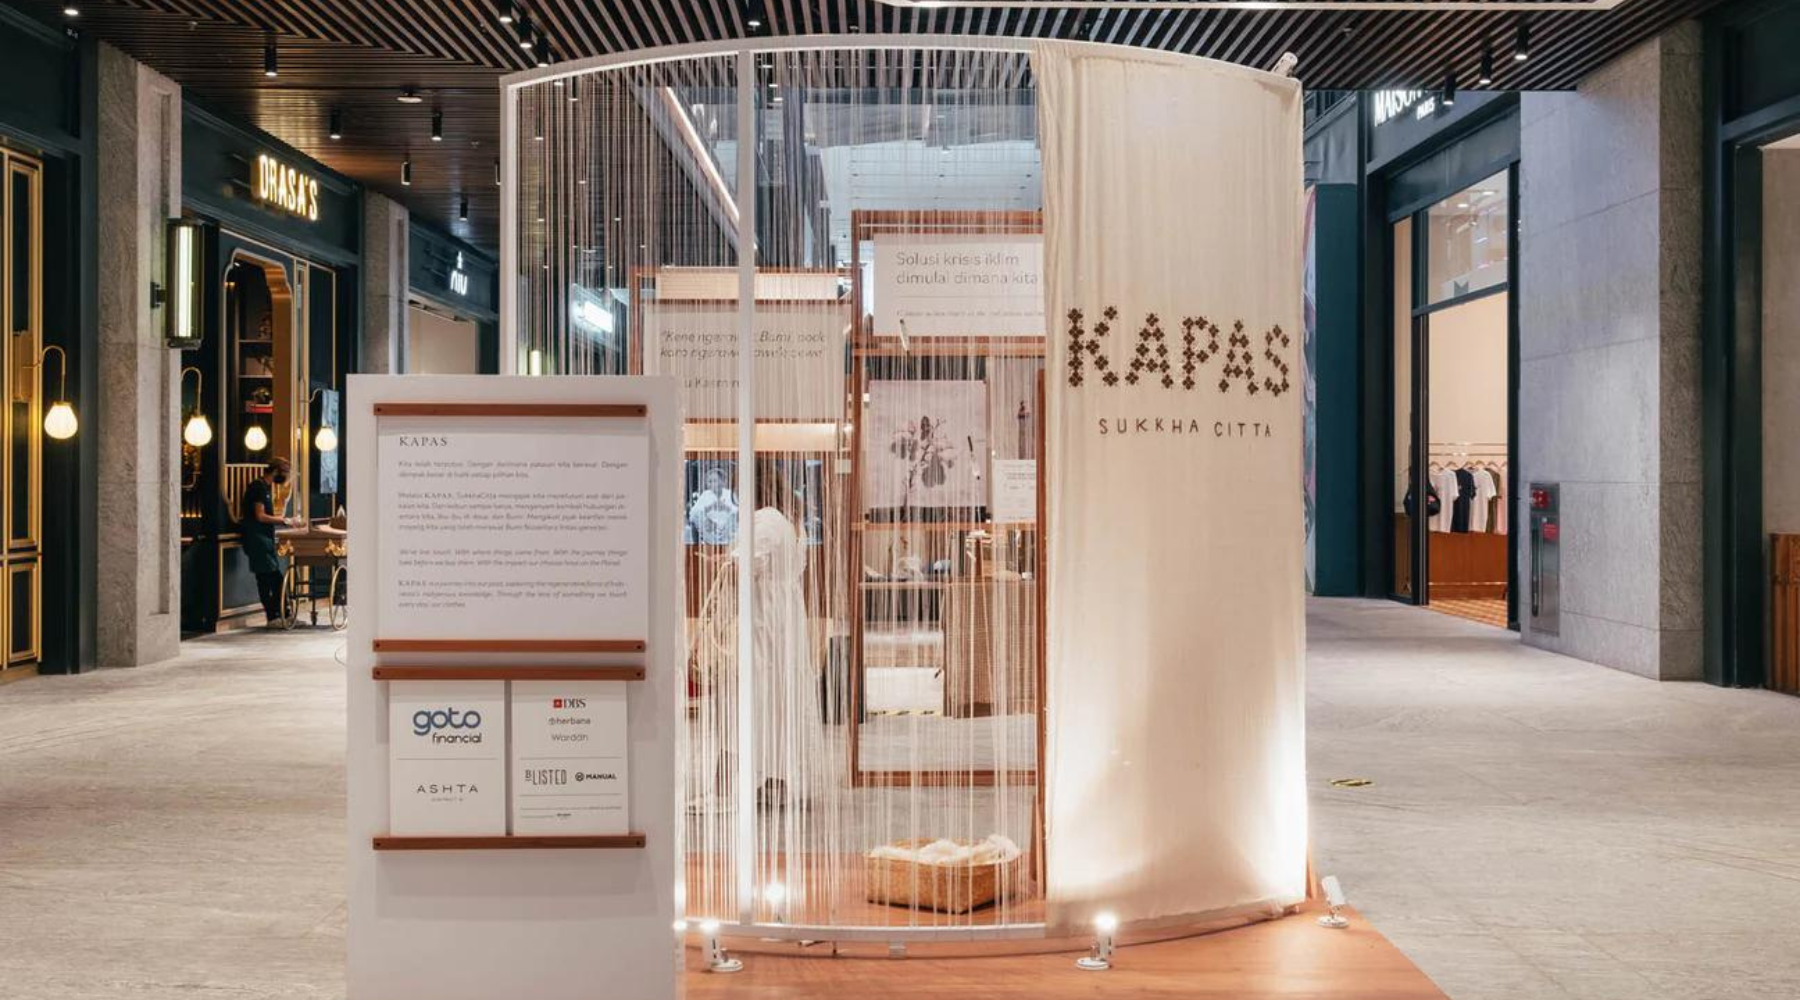 KAPAS - From Farm to Closet